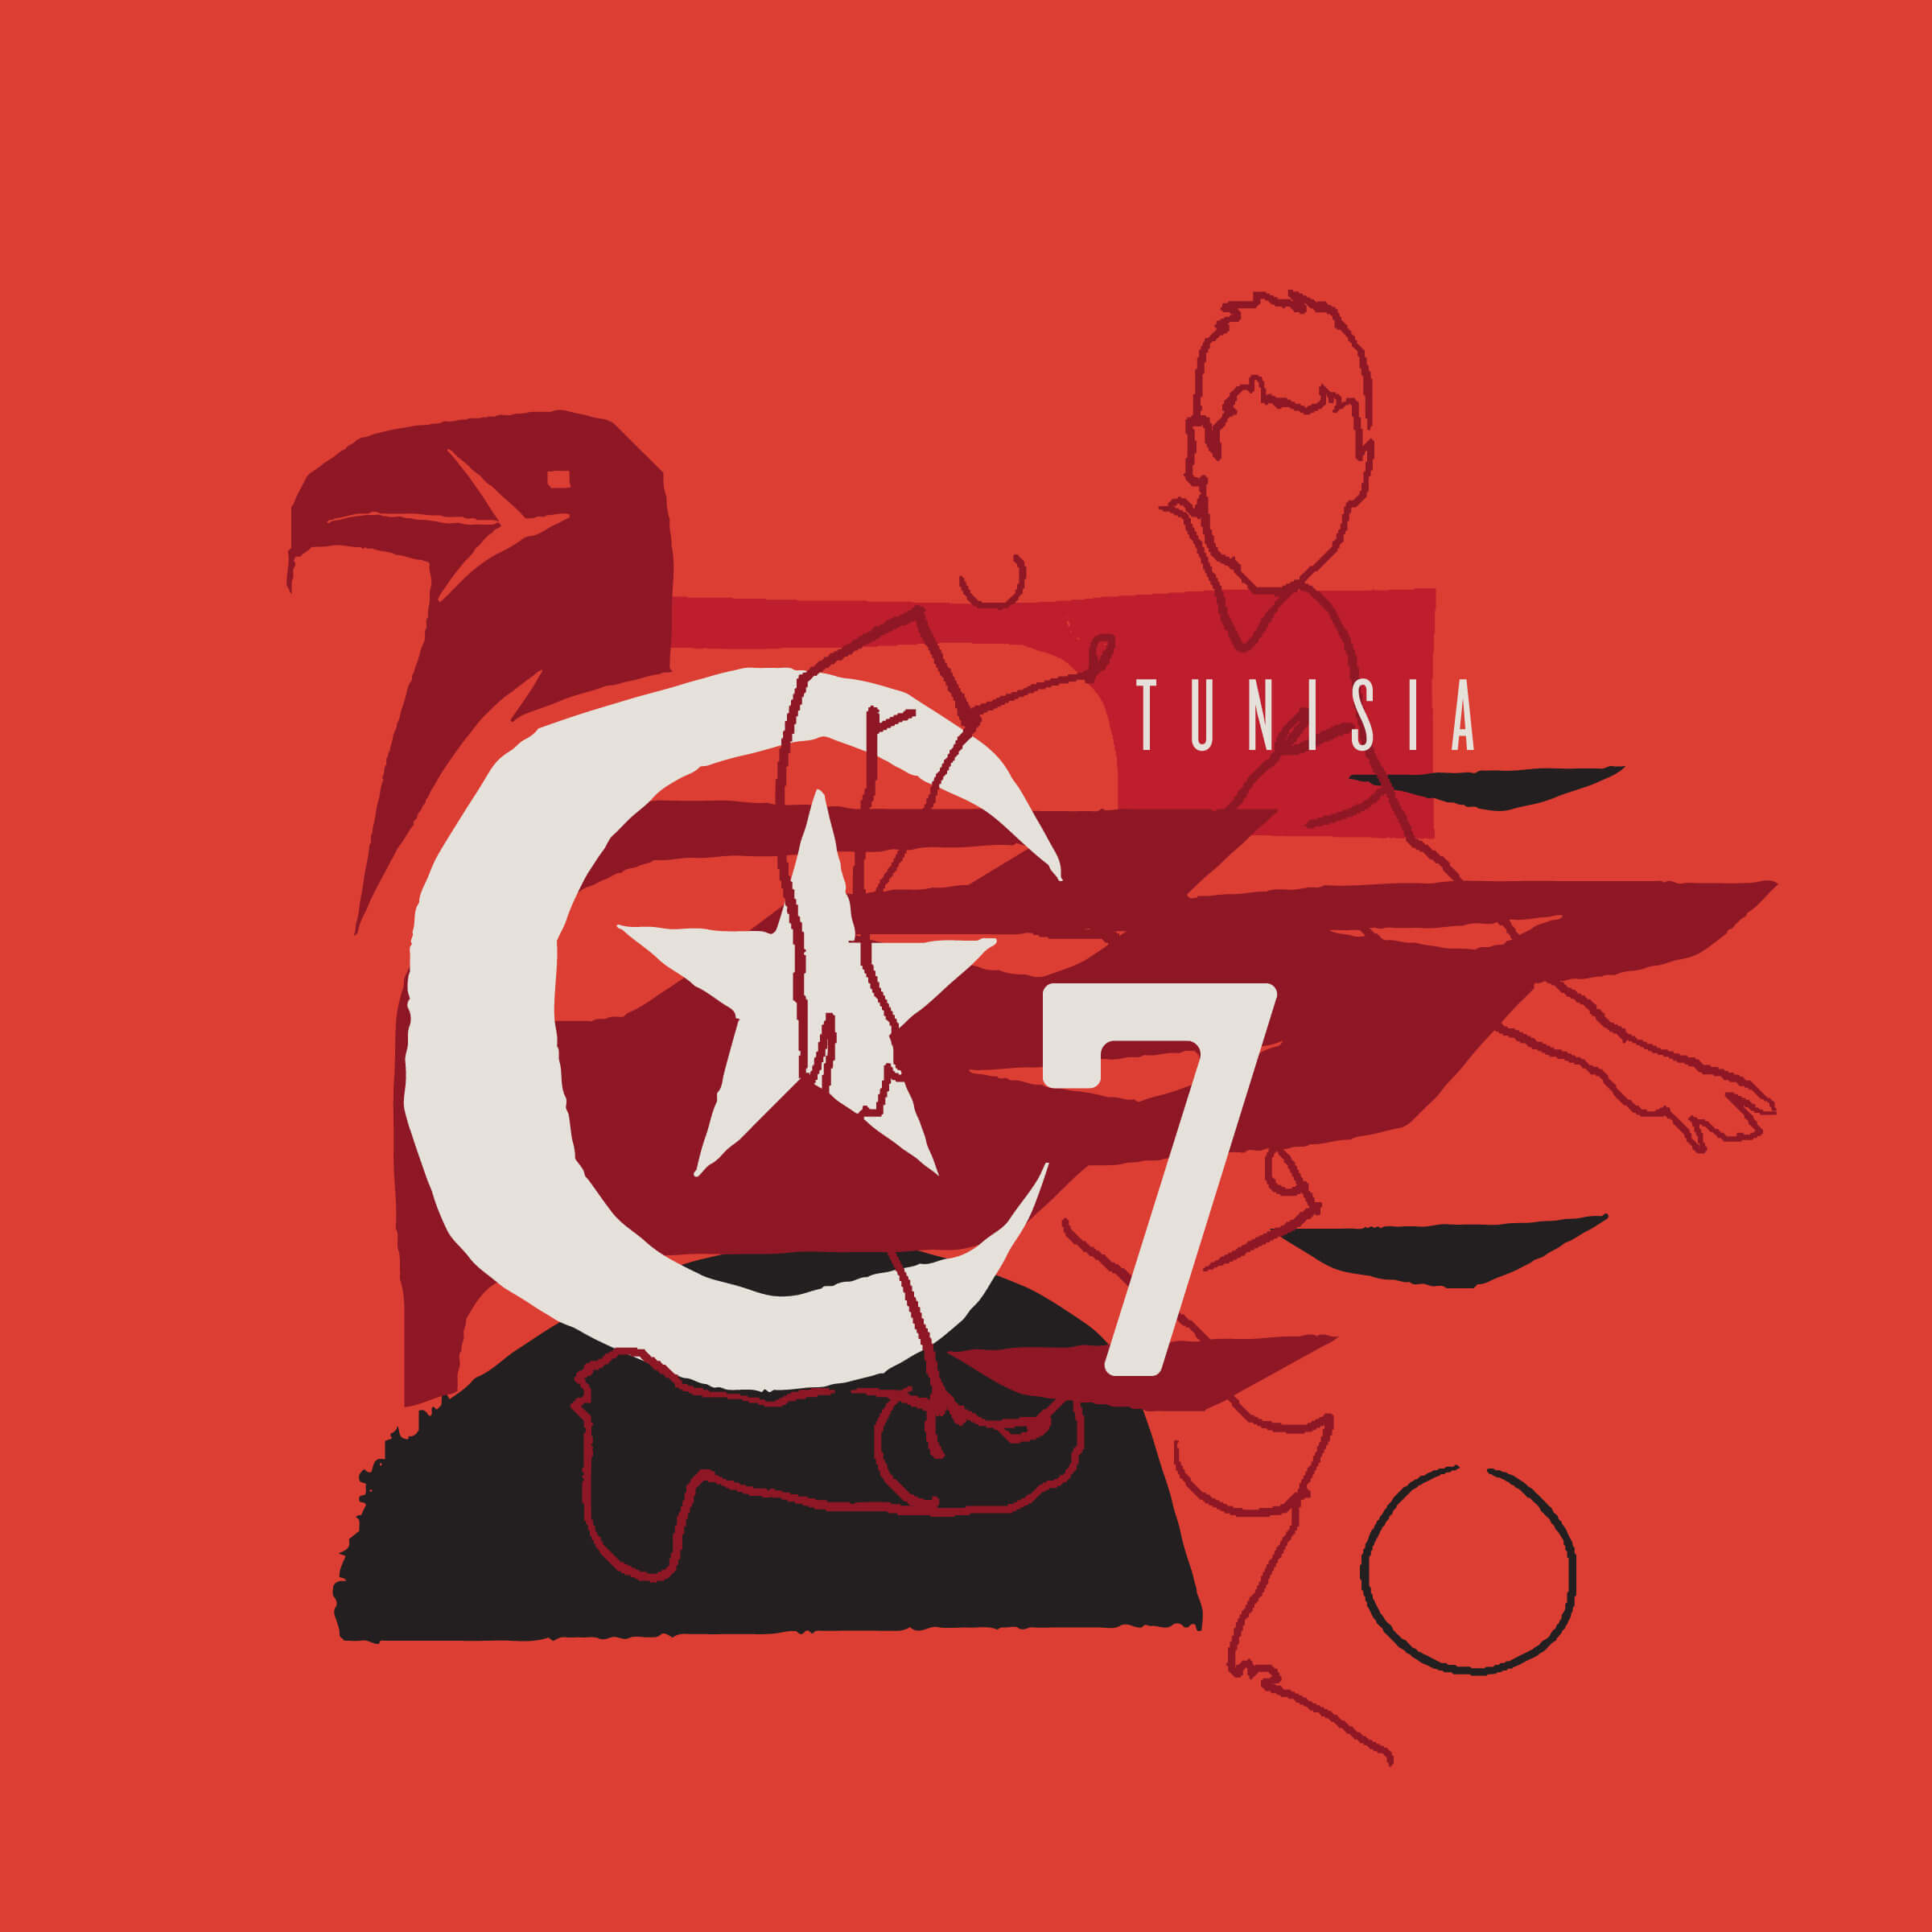 Tunisia-40